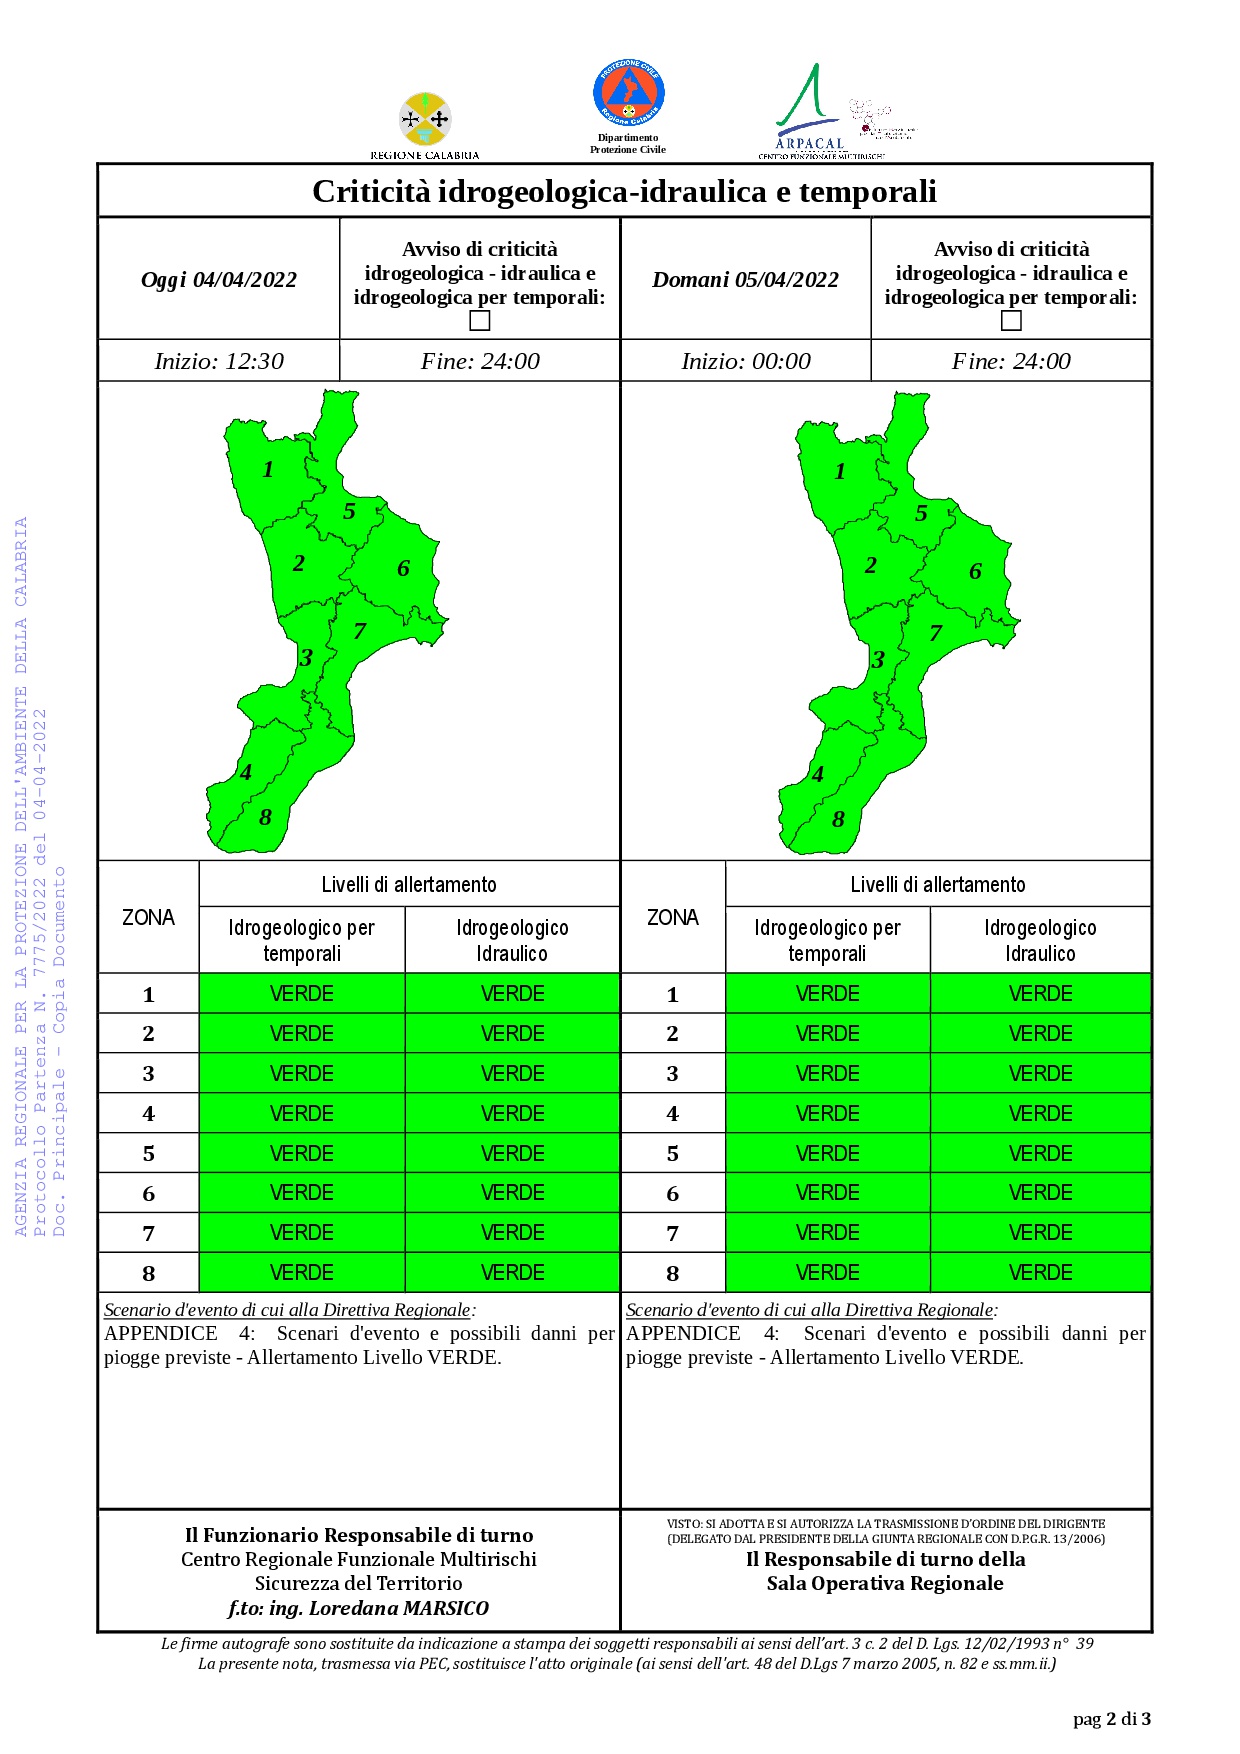 Criticità idrogeologica-idraulica e temporali in Calabria 04-04-2022